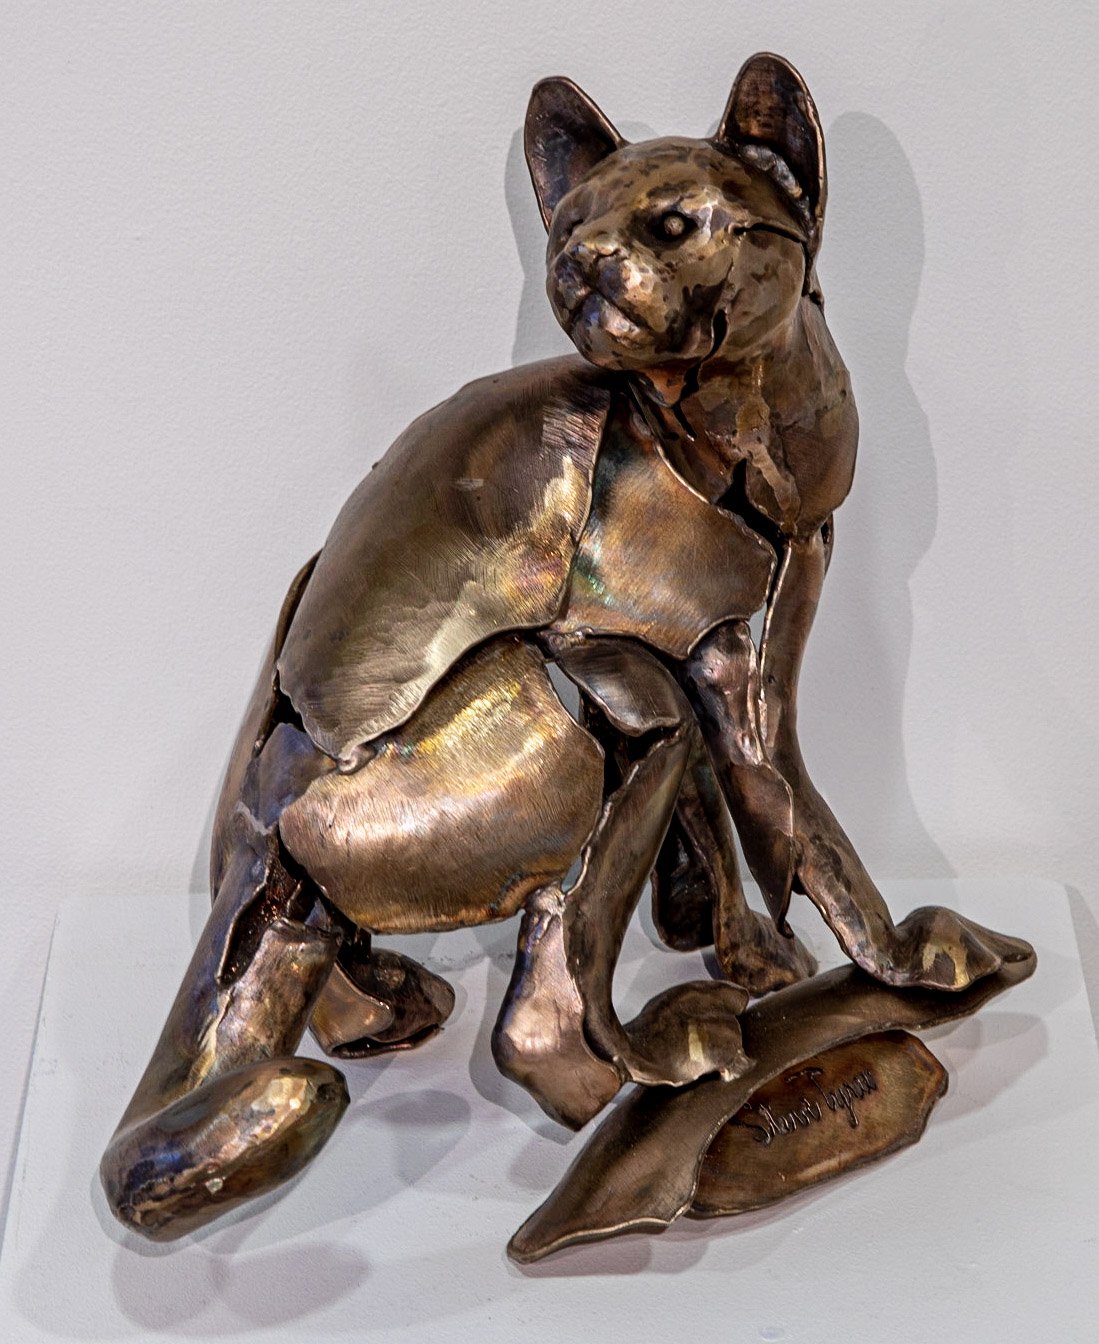 Steve Tyree, "Cougar Cub," Bronze